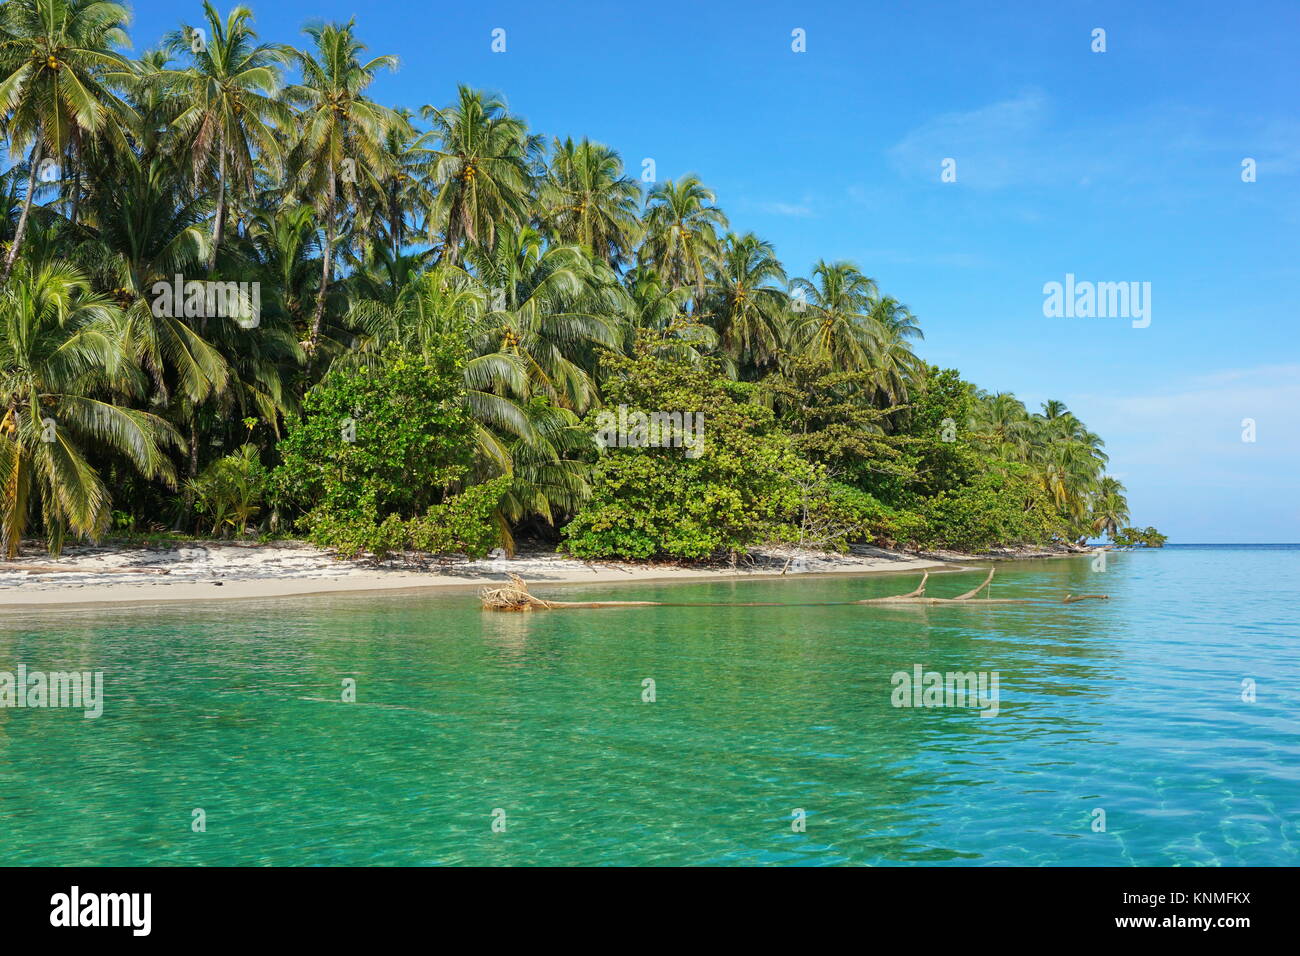 Central America, Panama, wild island coastline with lush tropical vegetation, Bastimentos national marine park, Bocas del Toro Stock Photo